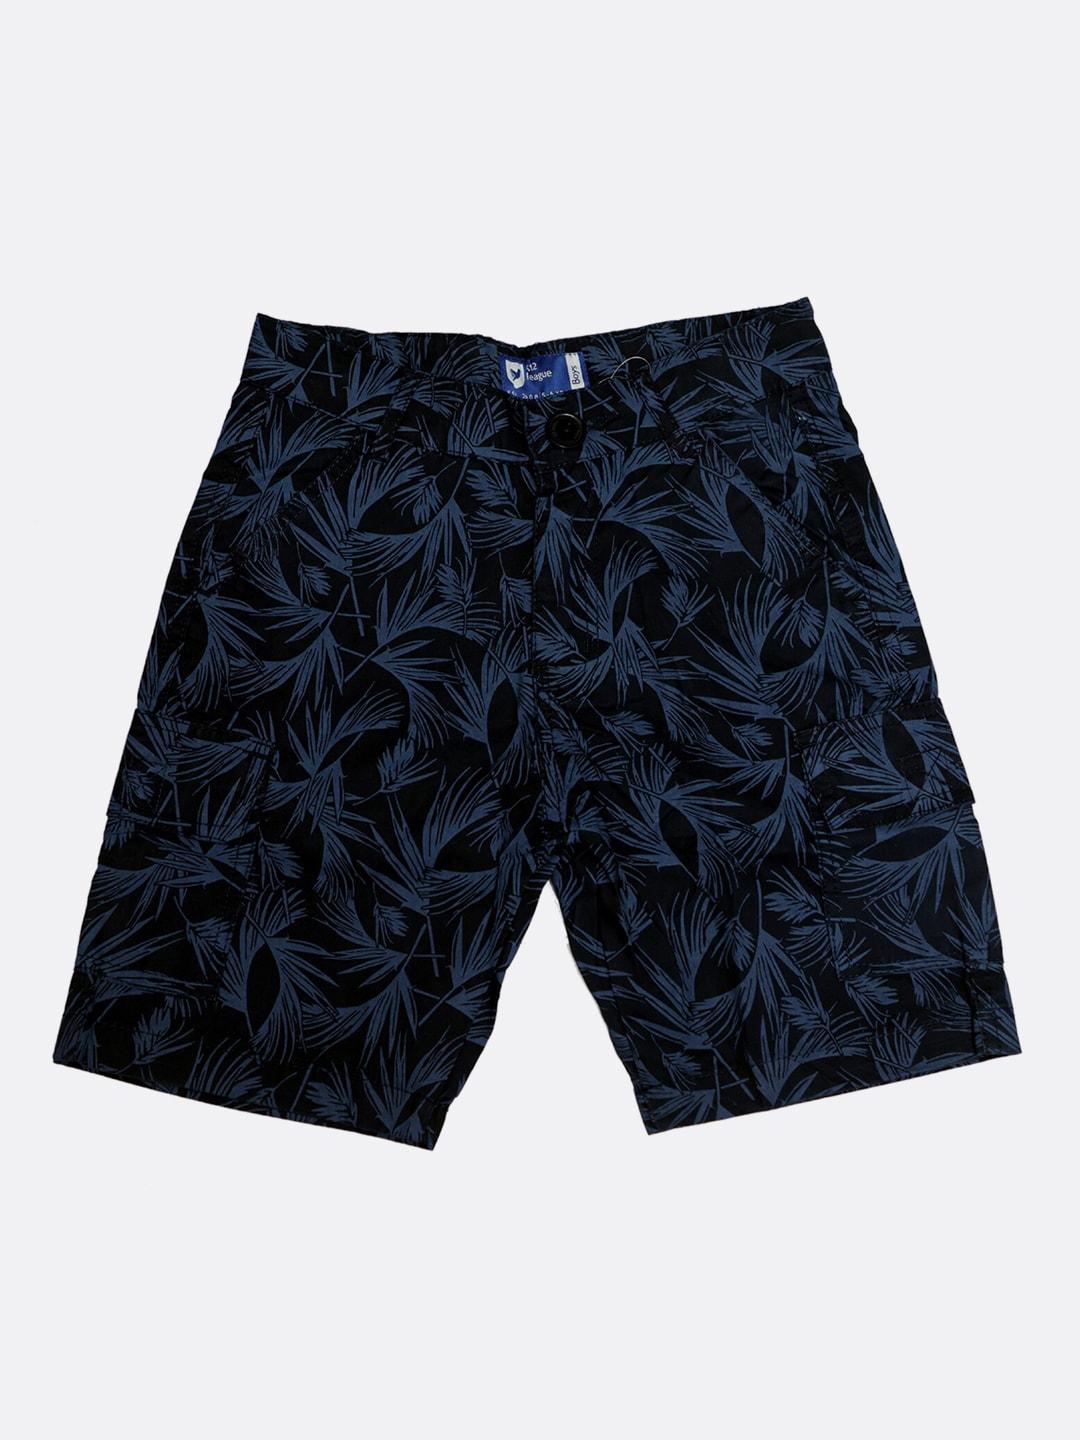 612league-boys-blue-floral-printed-running-shorts